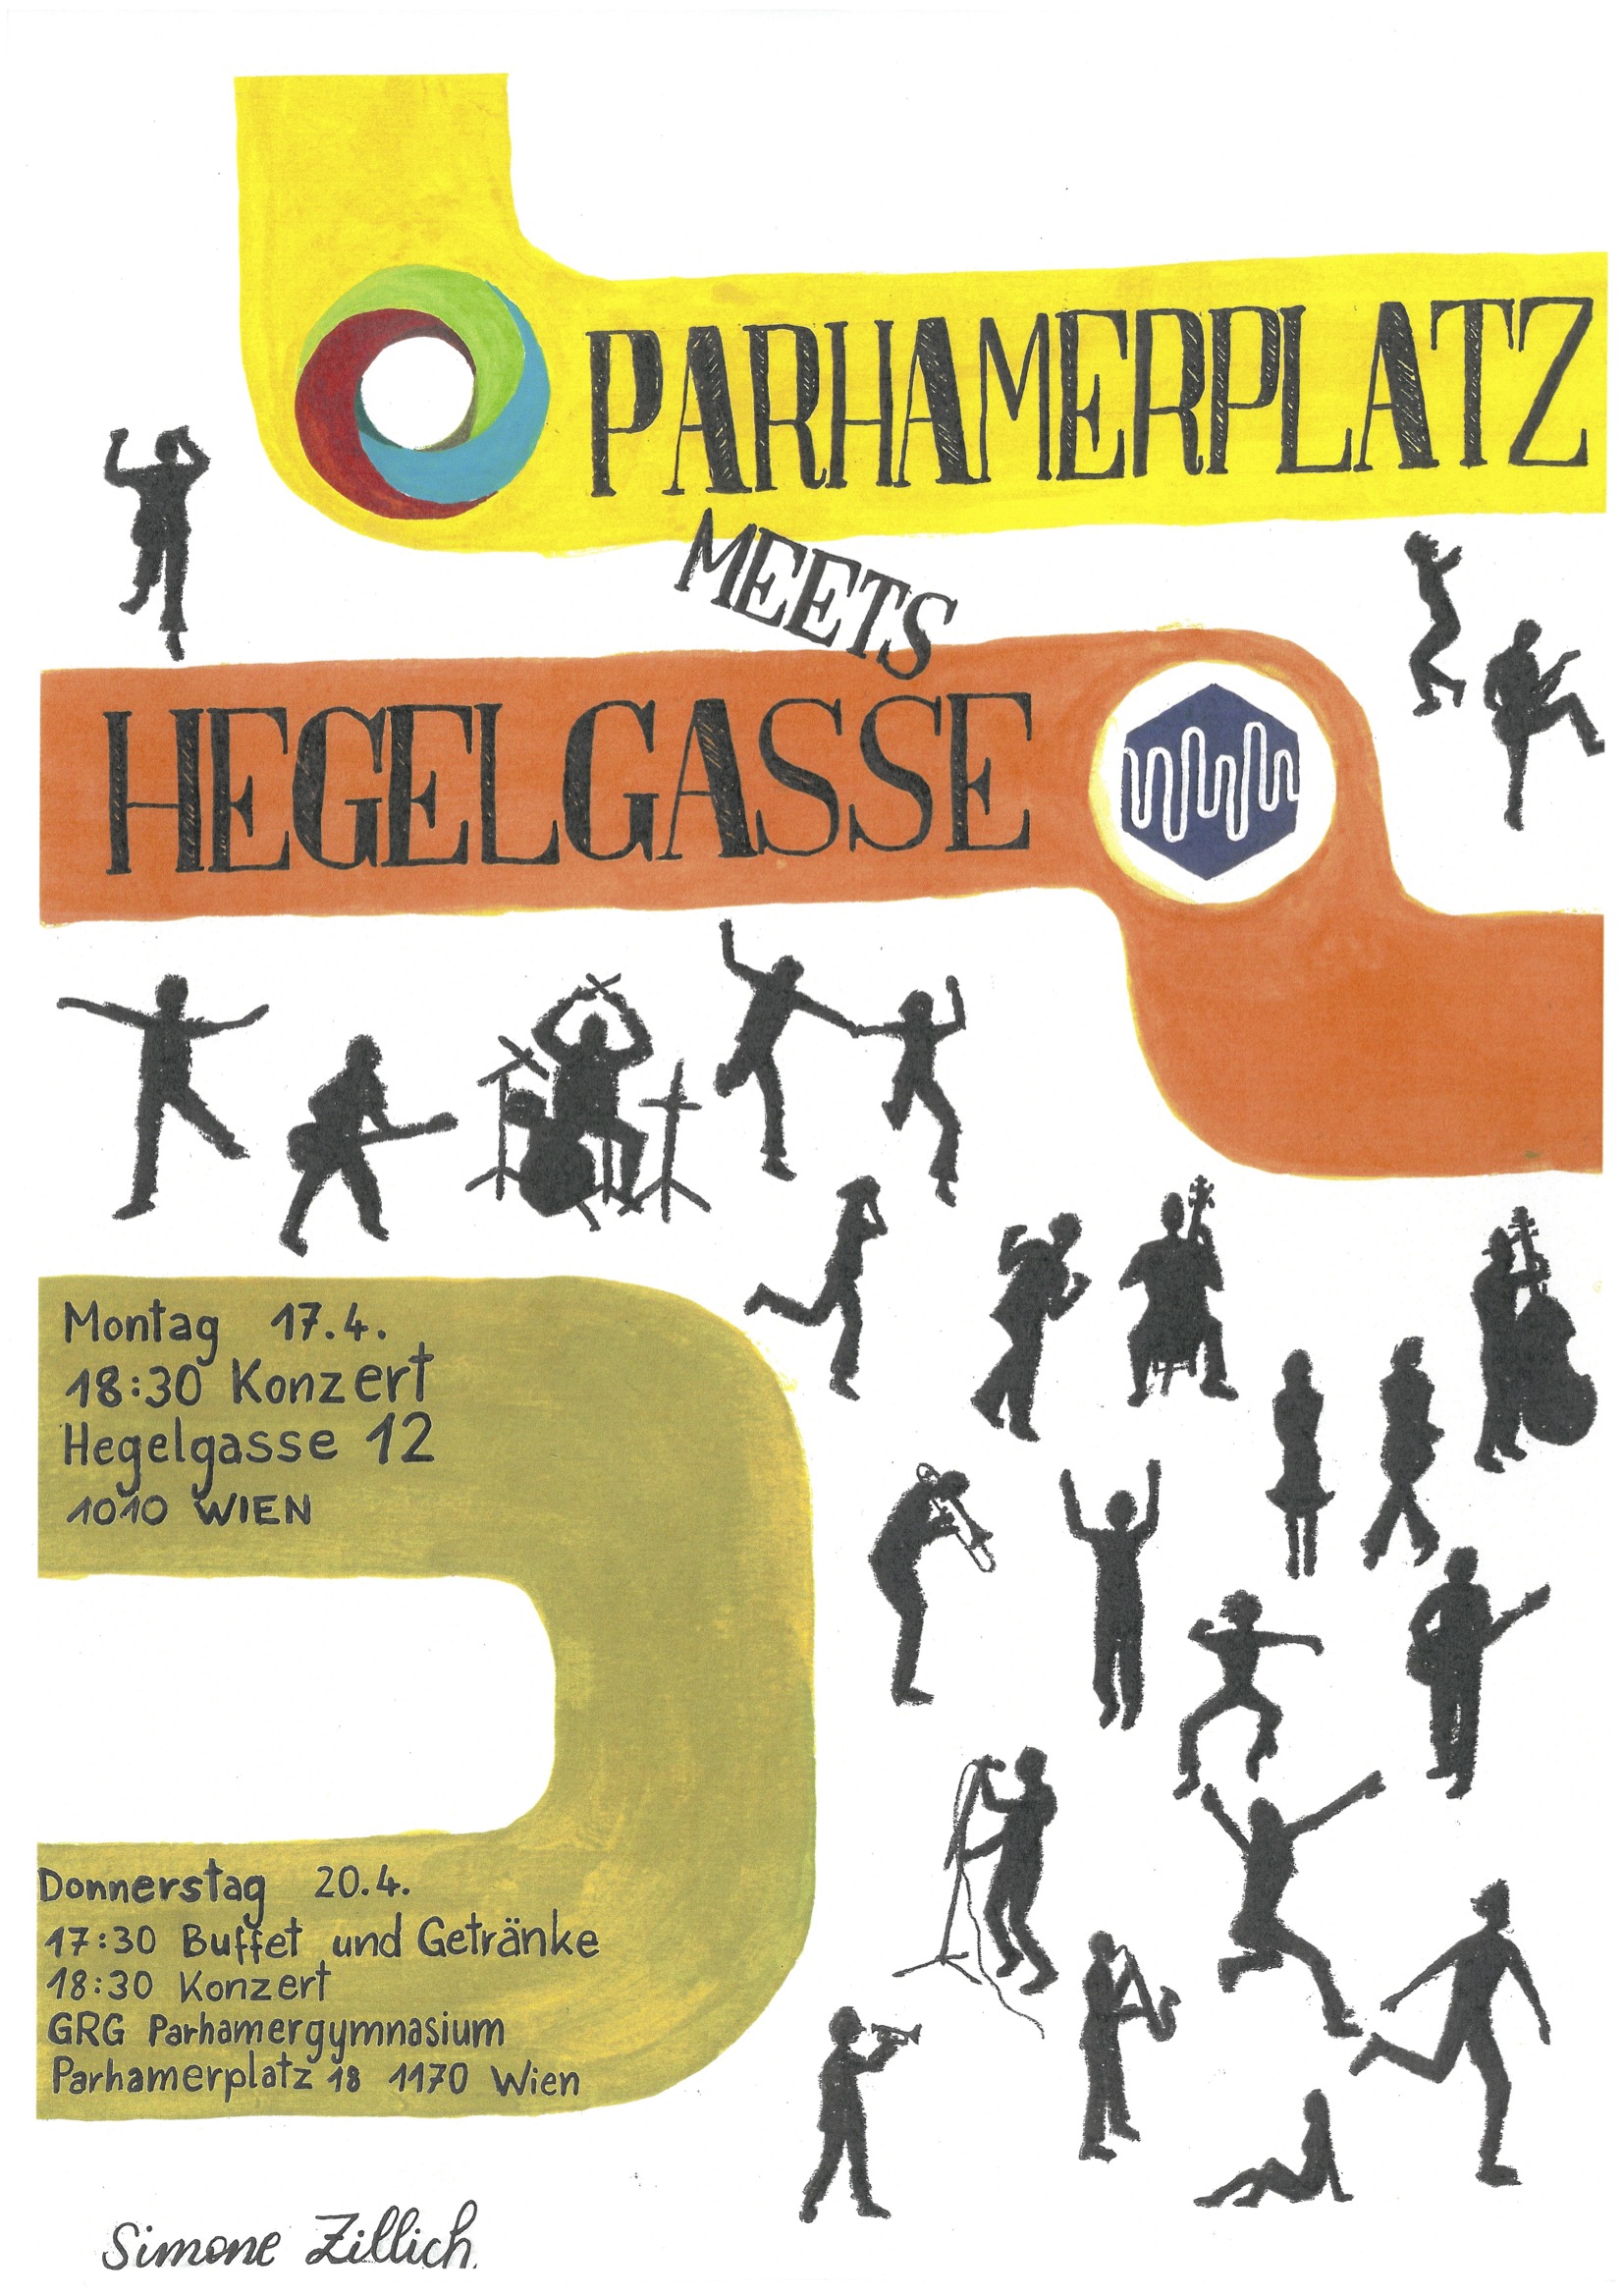 Parhamerplatz meets Hegelgasse